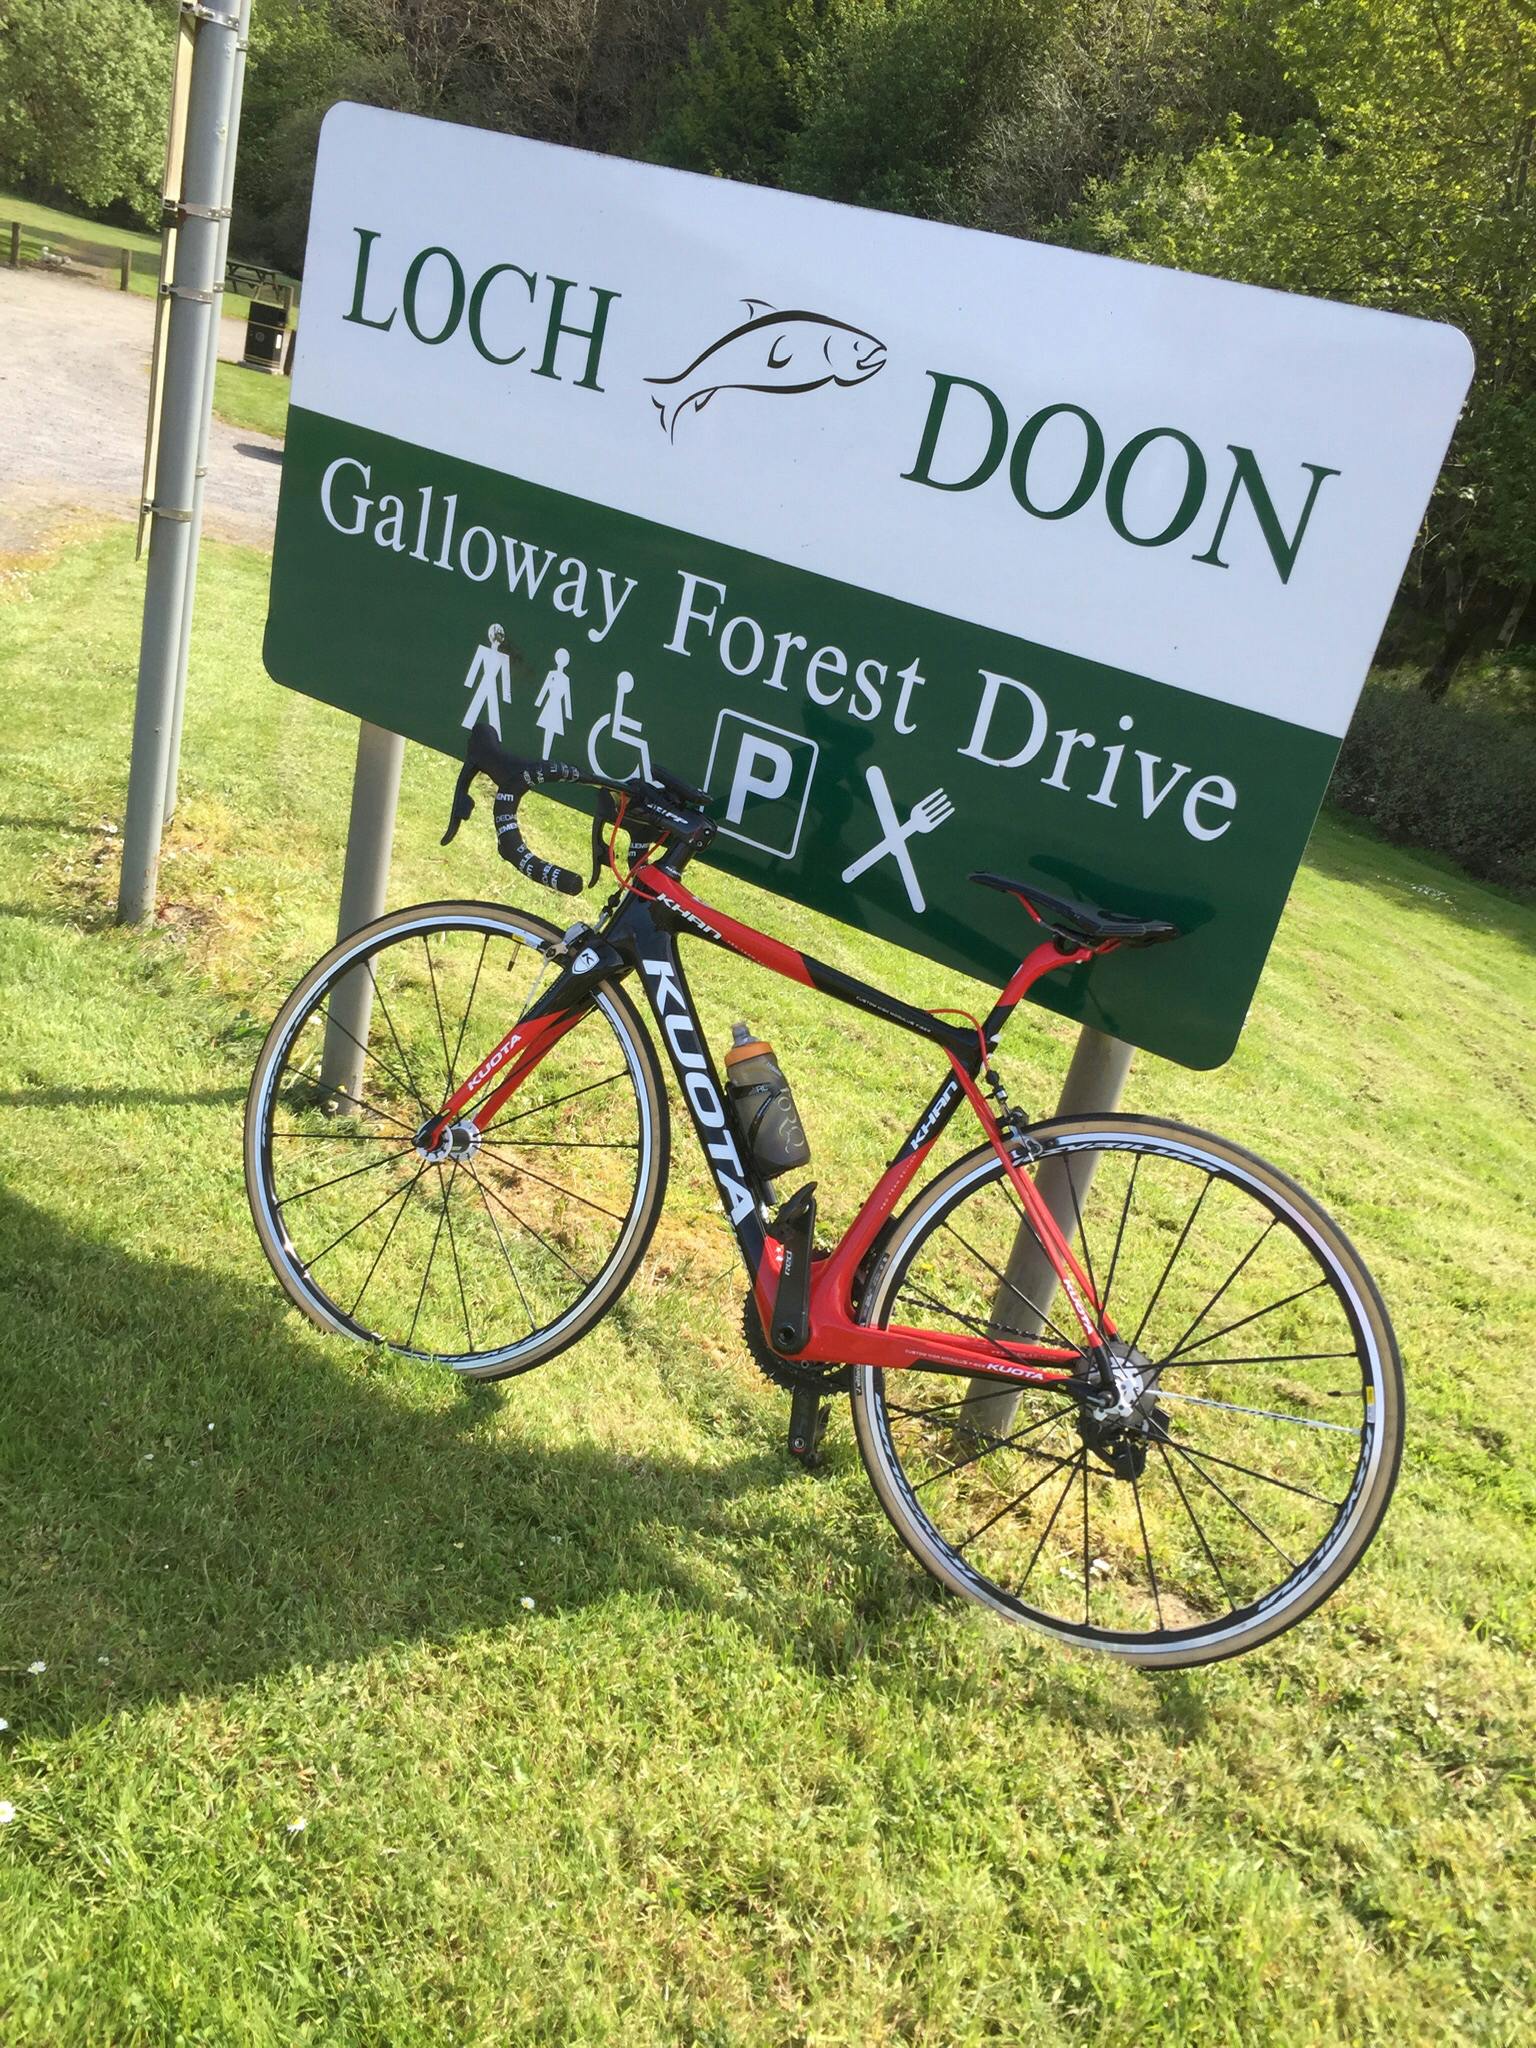 Loch doon 